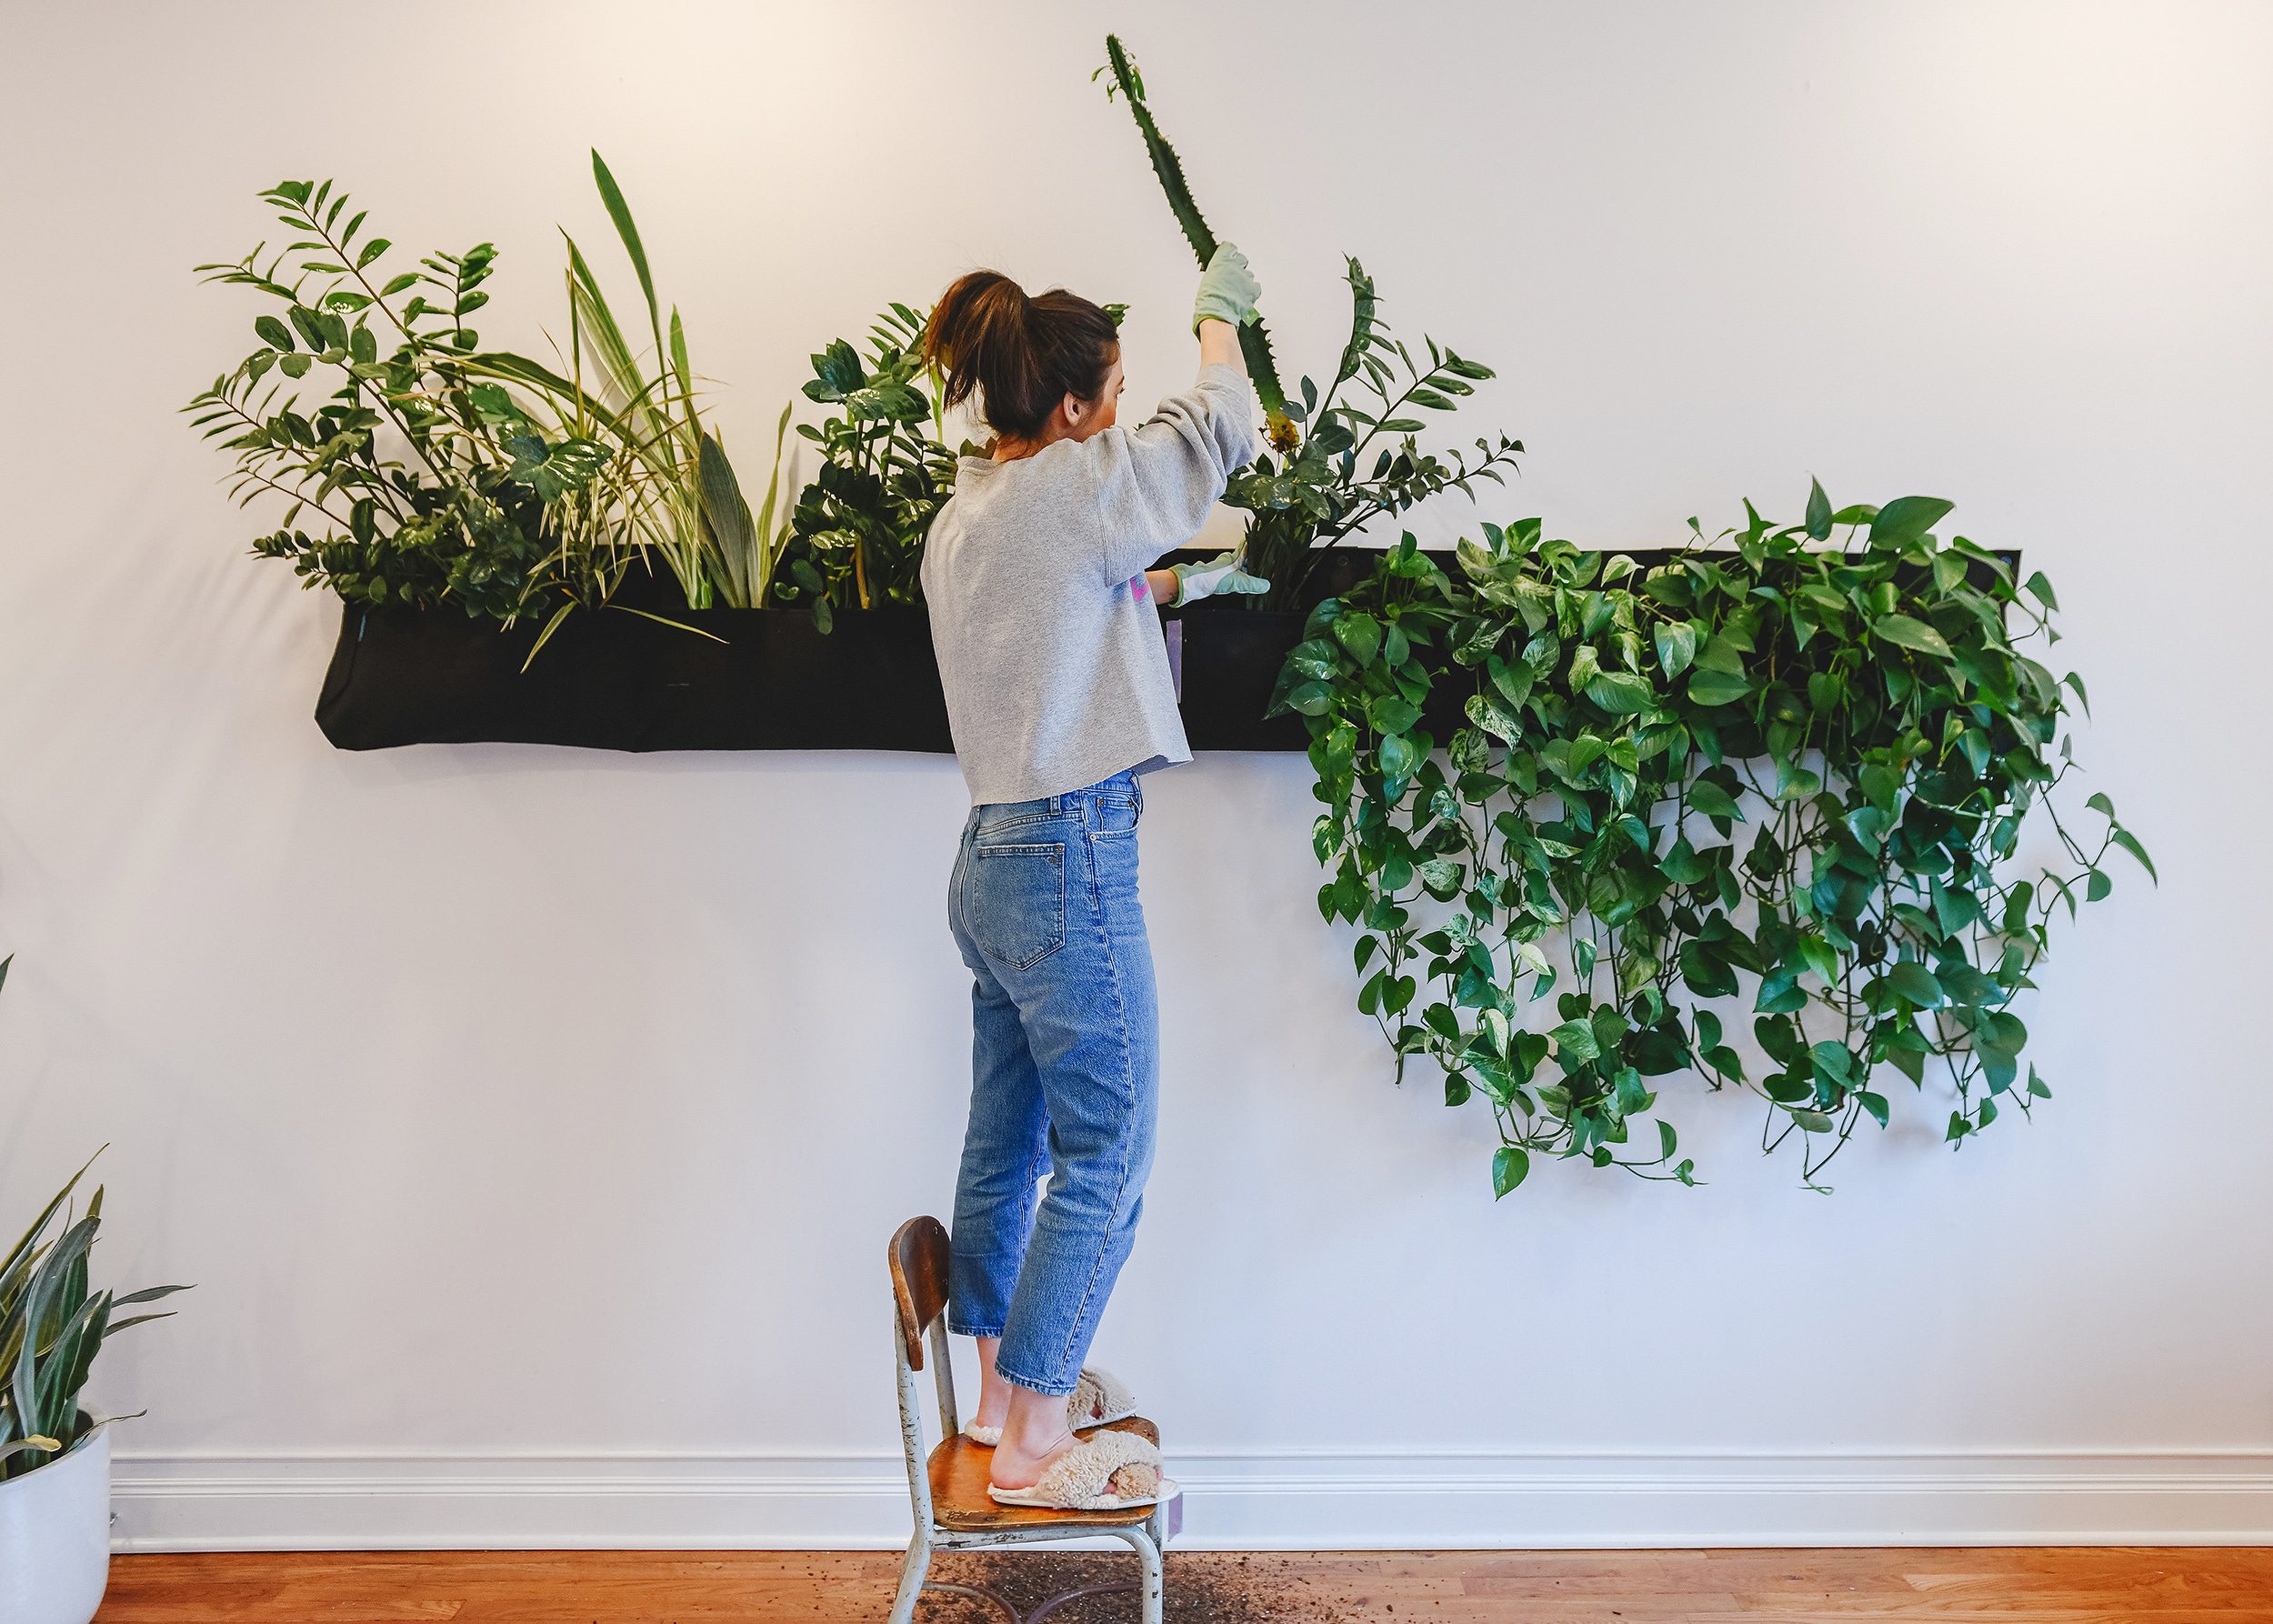 Kim rearranging a living wall planter | via Yellow Brick Home